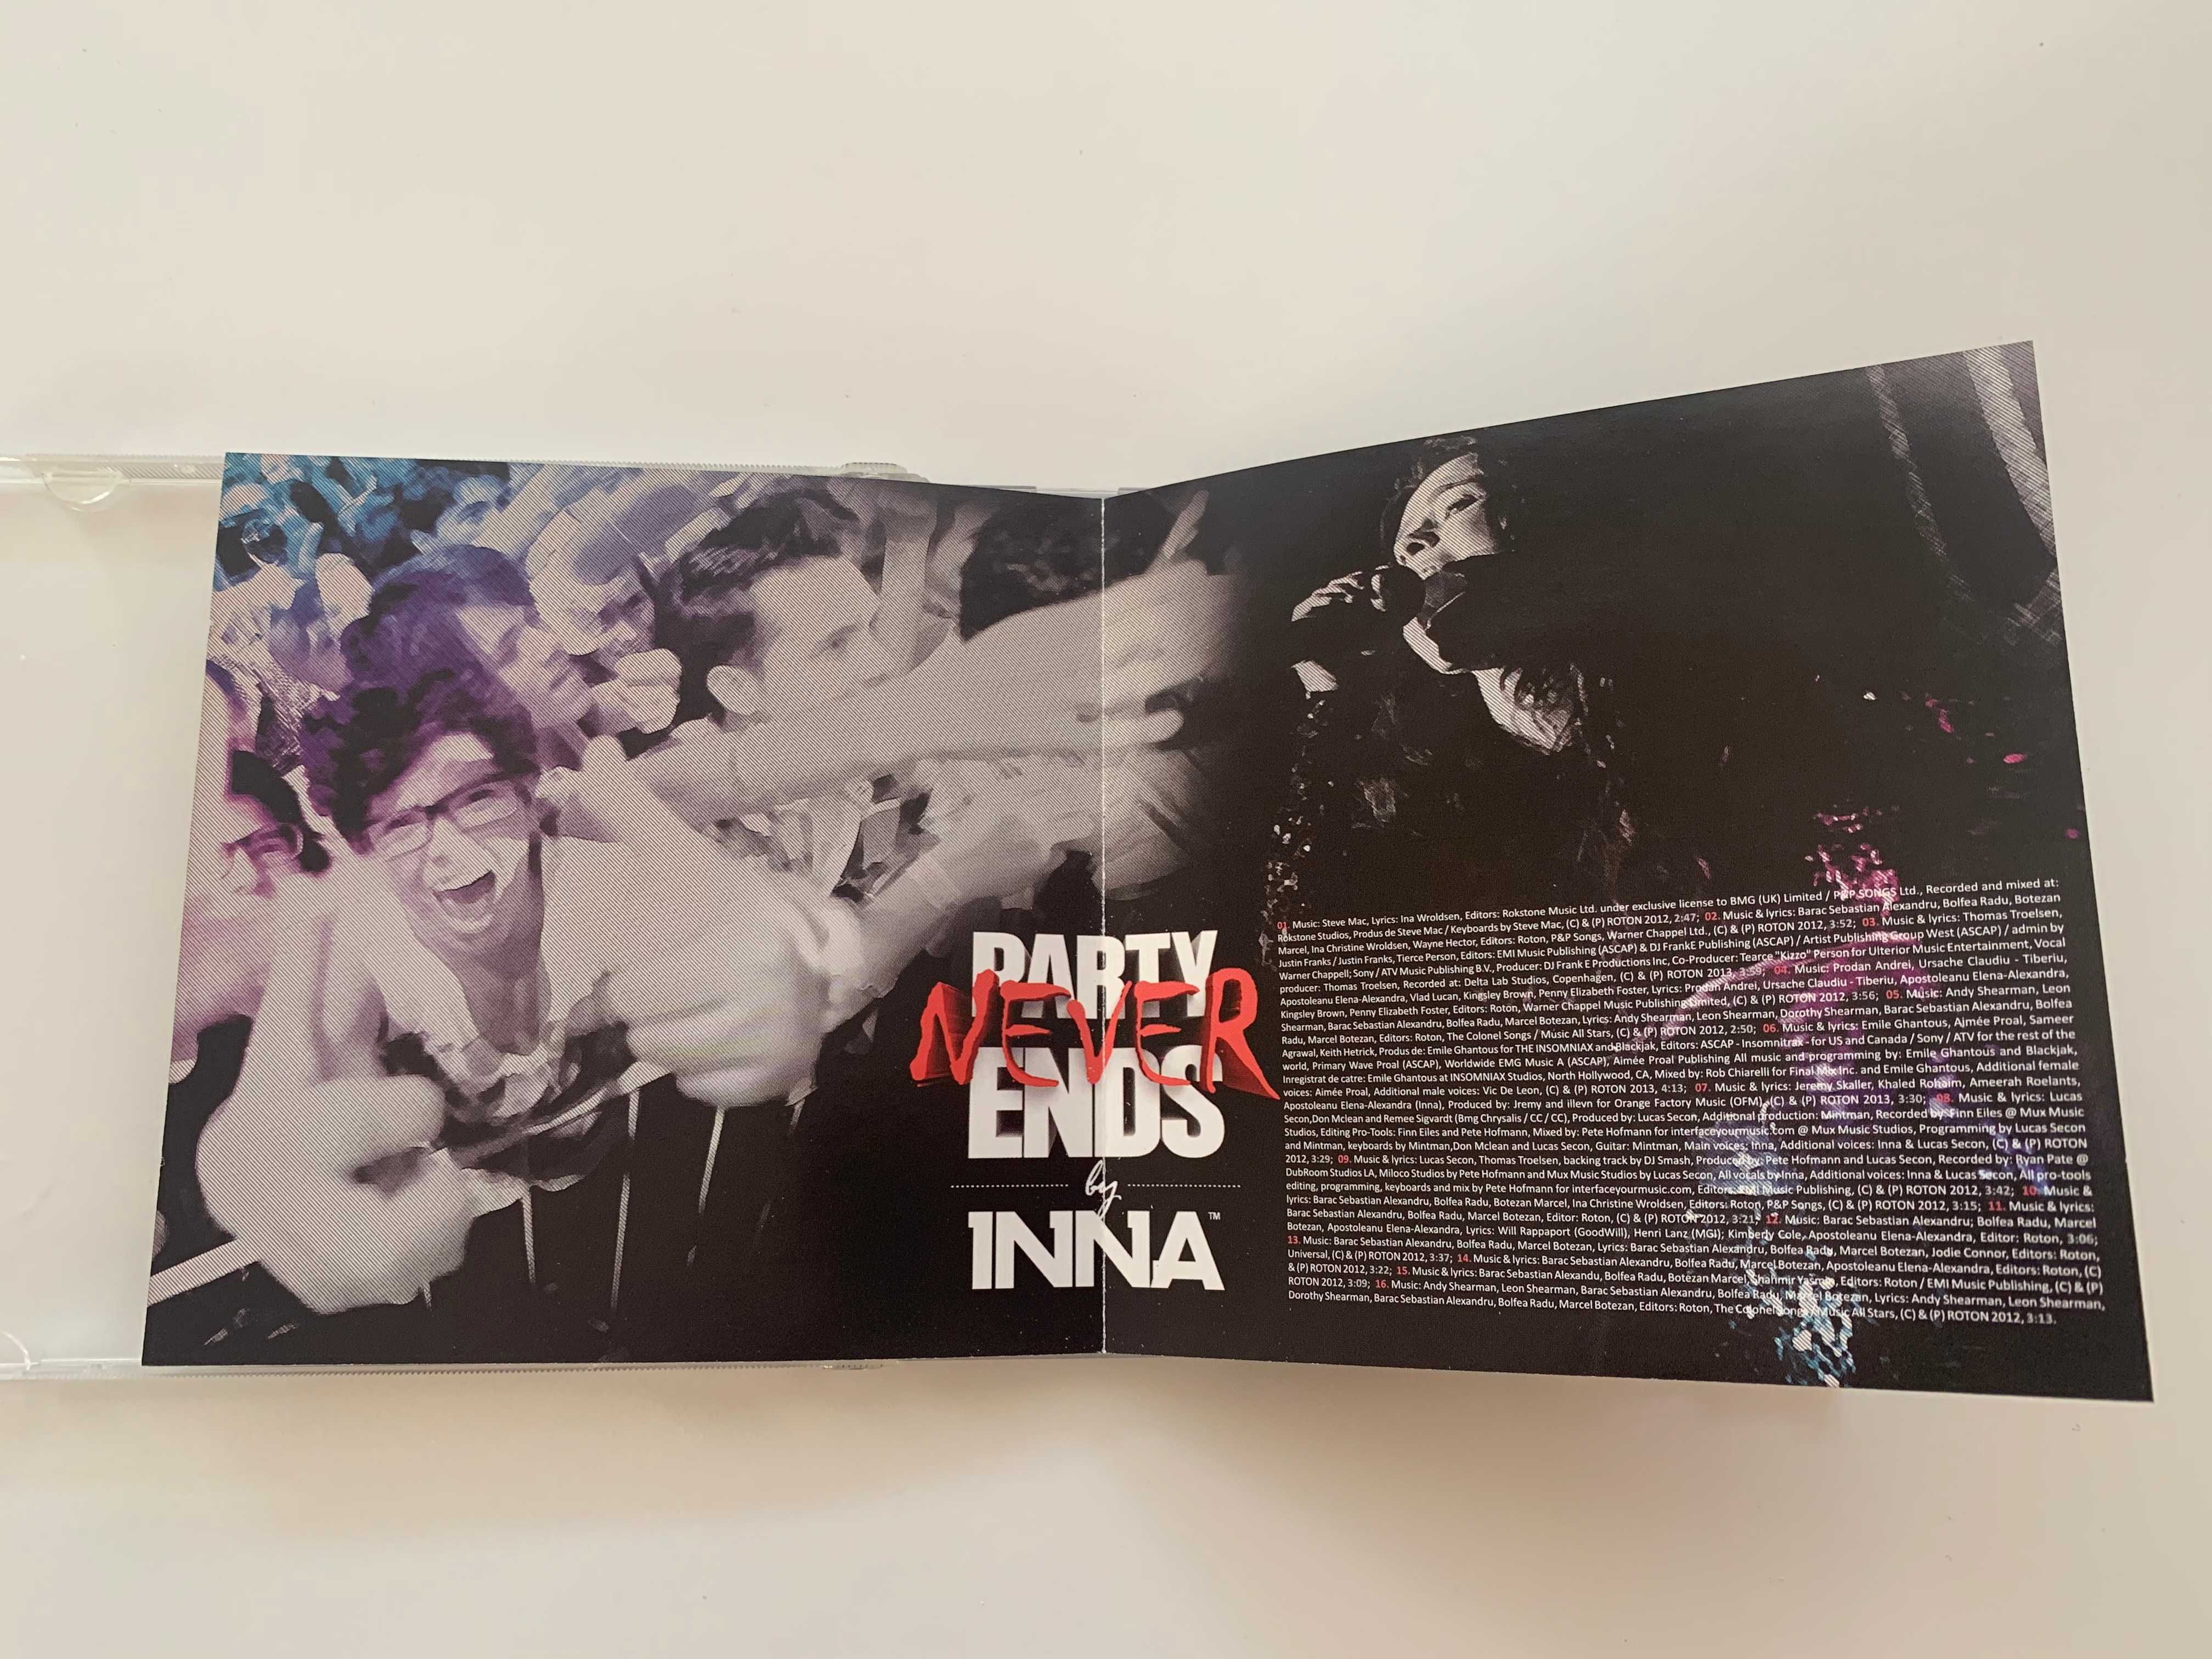 płyta kompaktowa CD Inna - Party Never Ends muzyka dance 2013